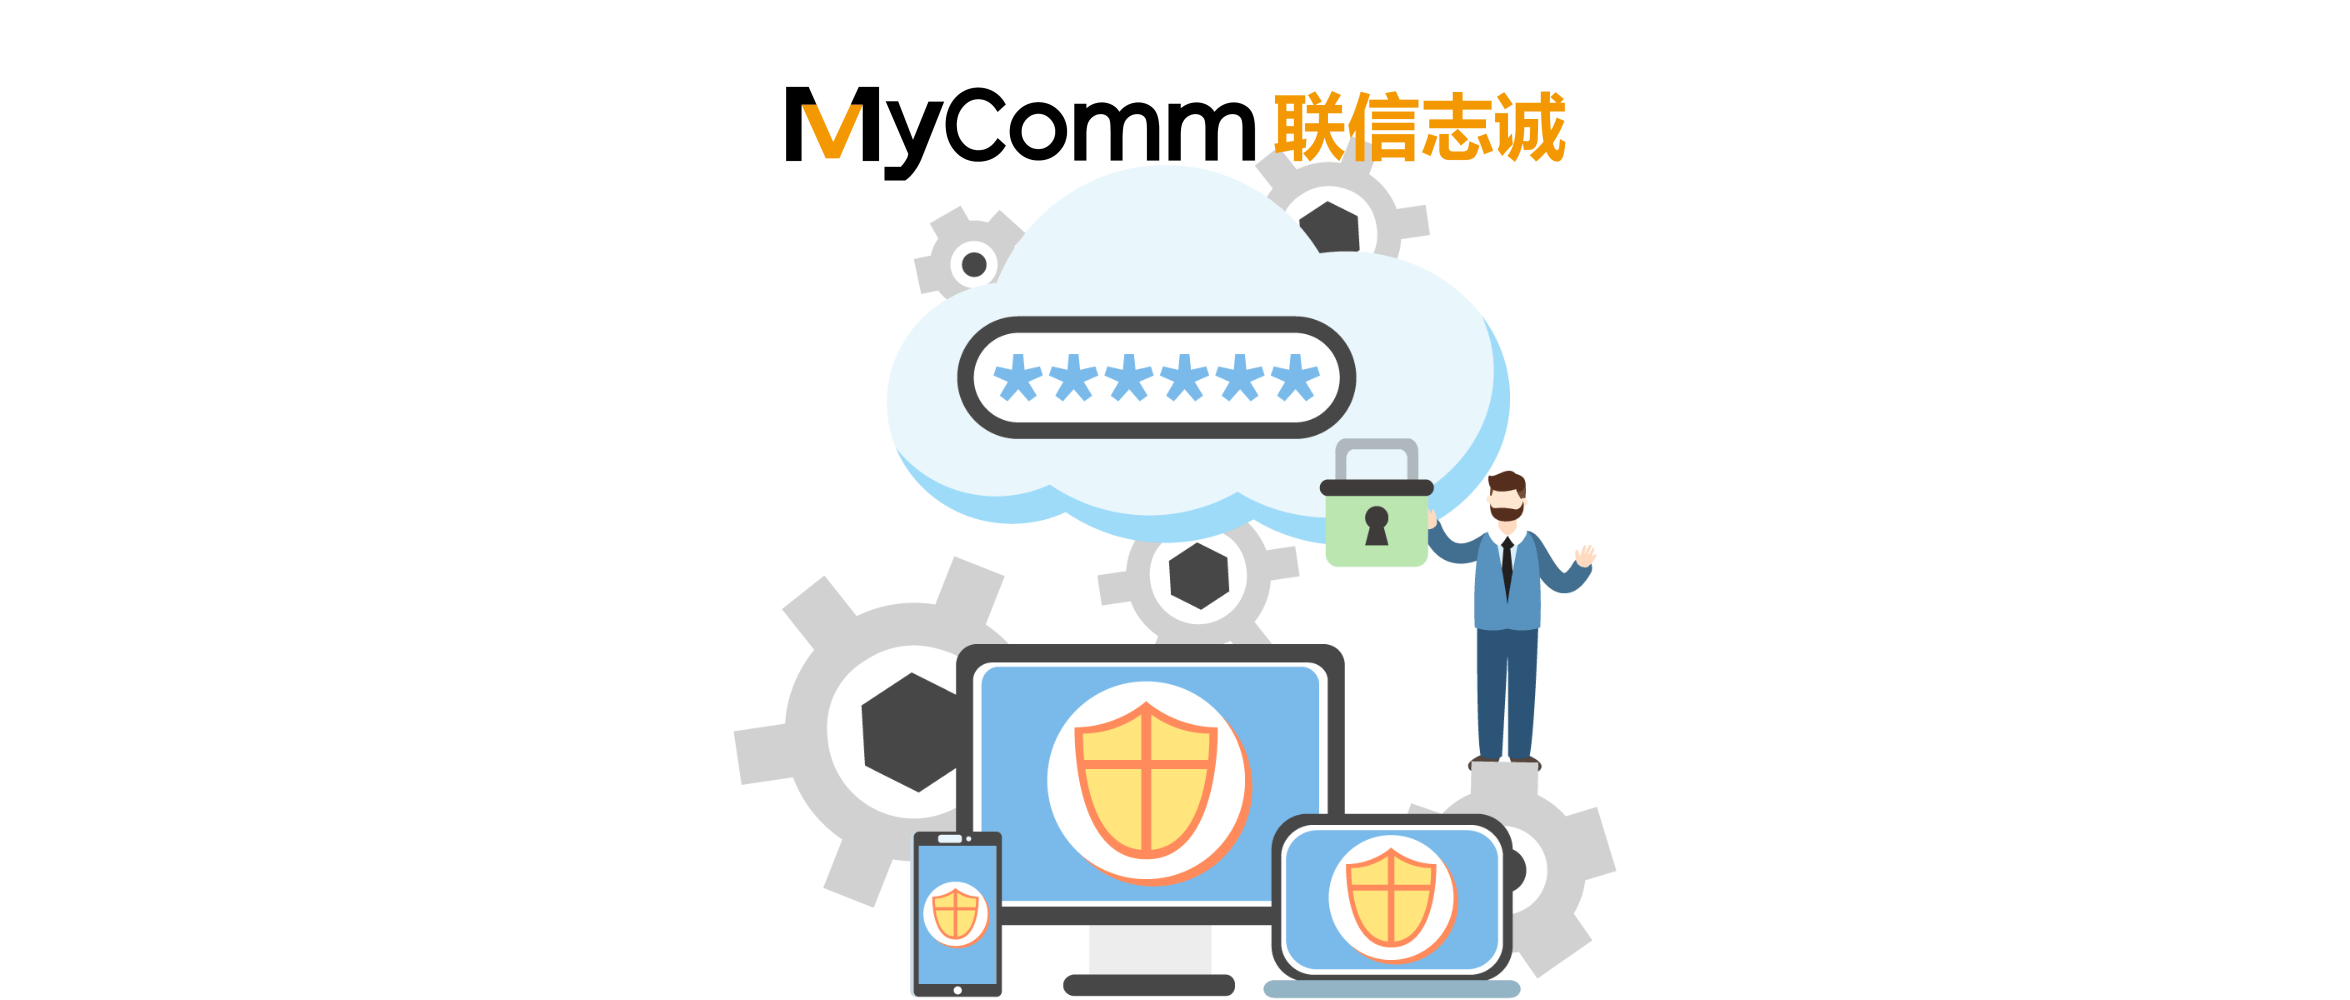 MyComm为您做到：客户一呼即应，客服有序服务